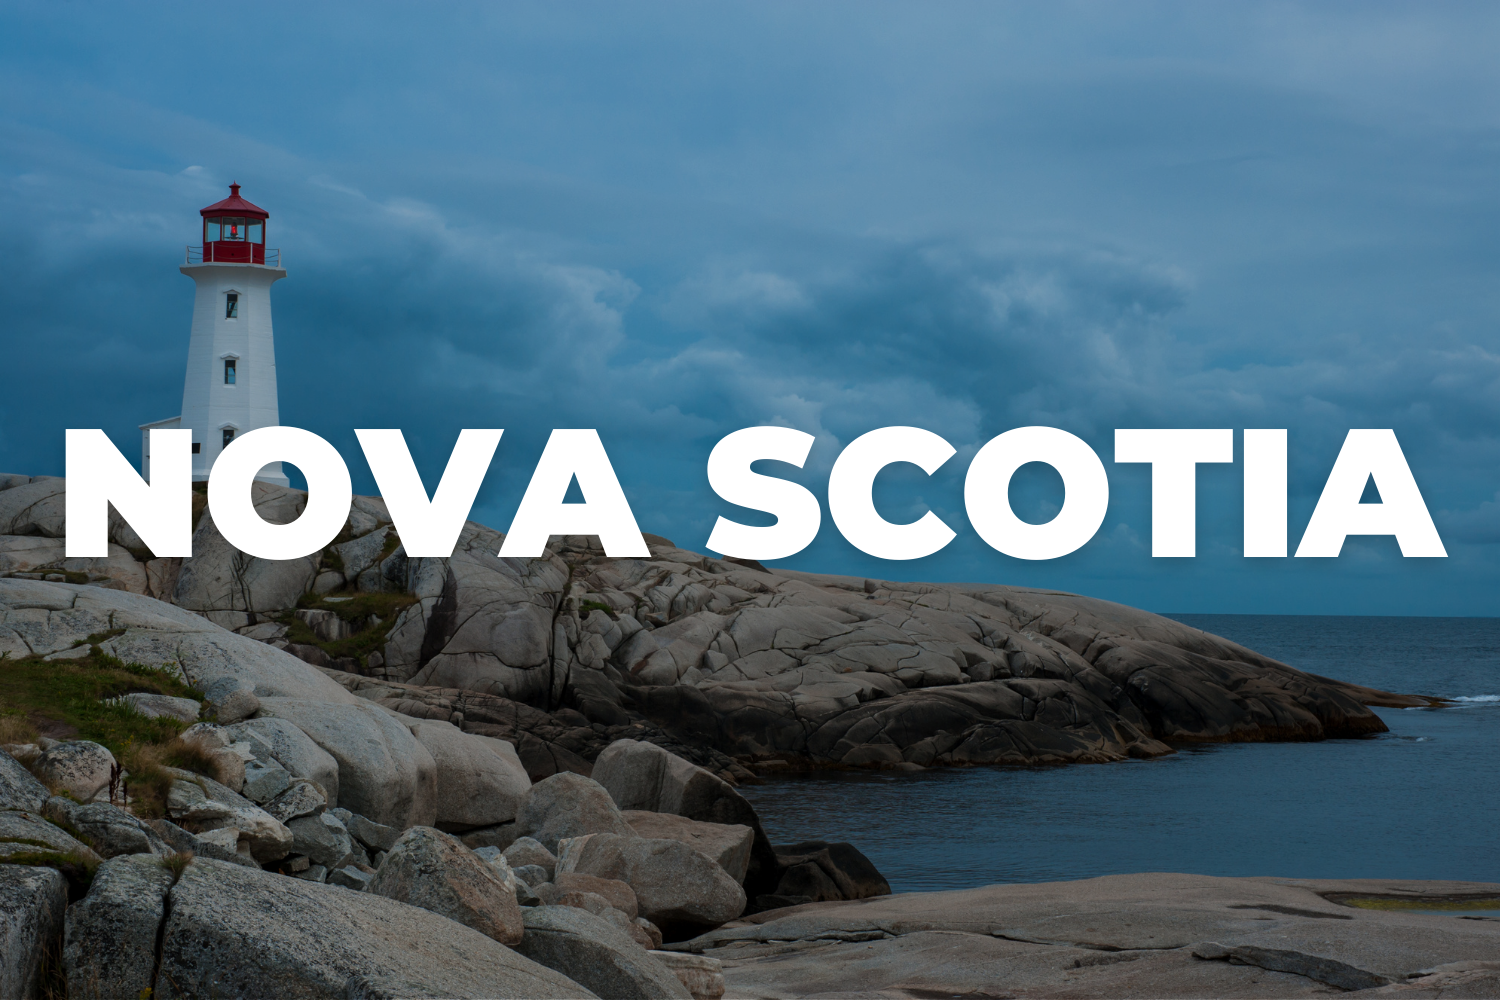 Nova Scotia Background